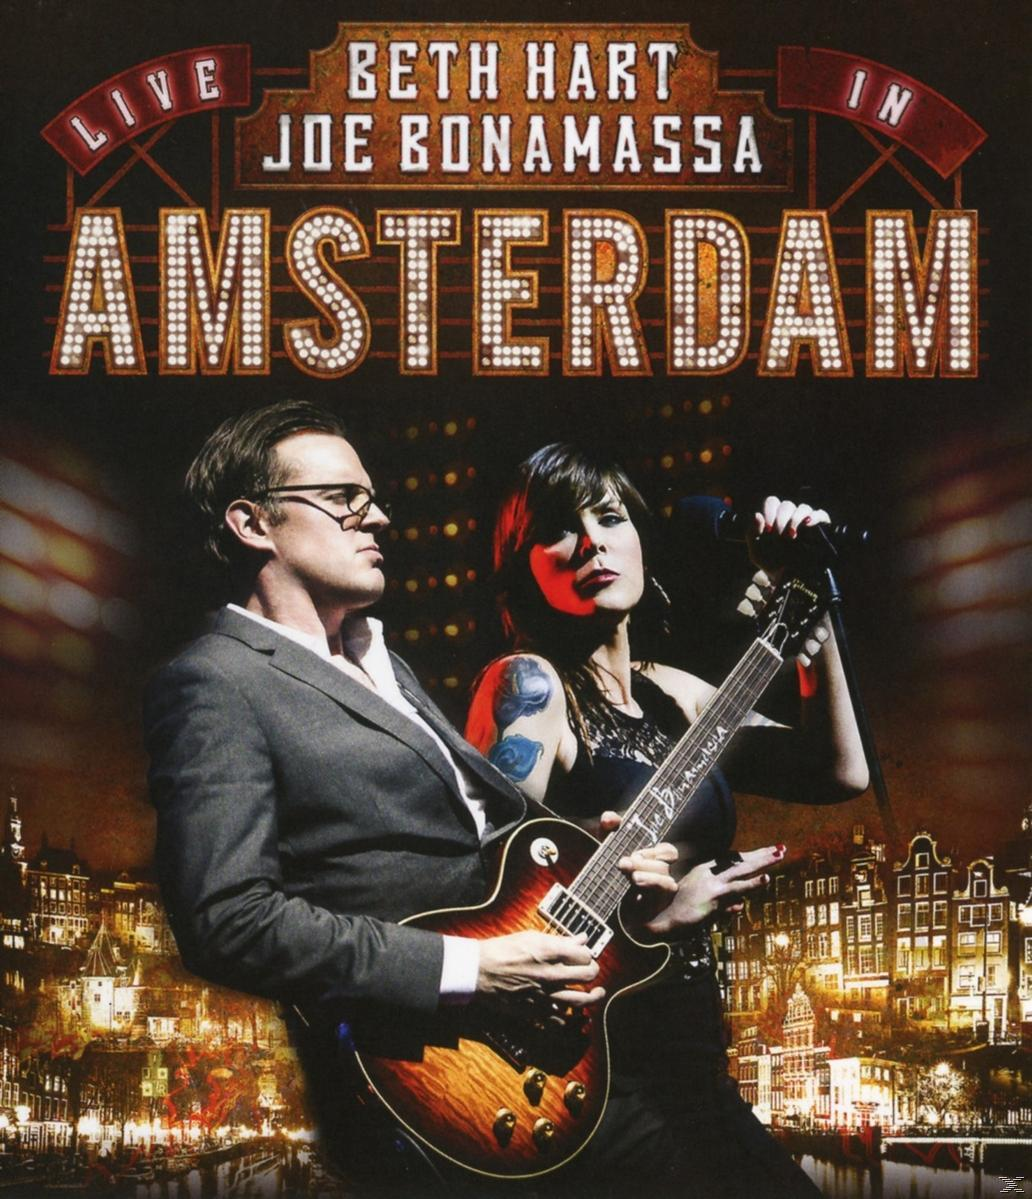 Live - Beth (Blu-ray) Amsterdam In Hart, Joe - Bonamassa